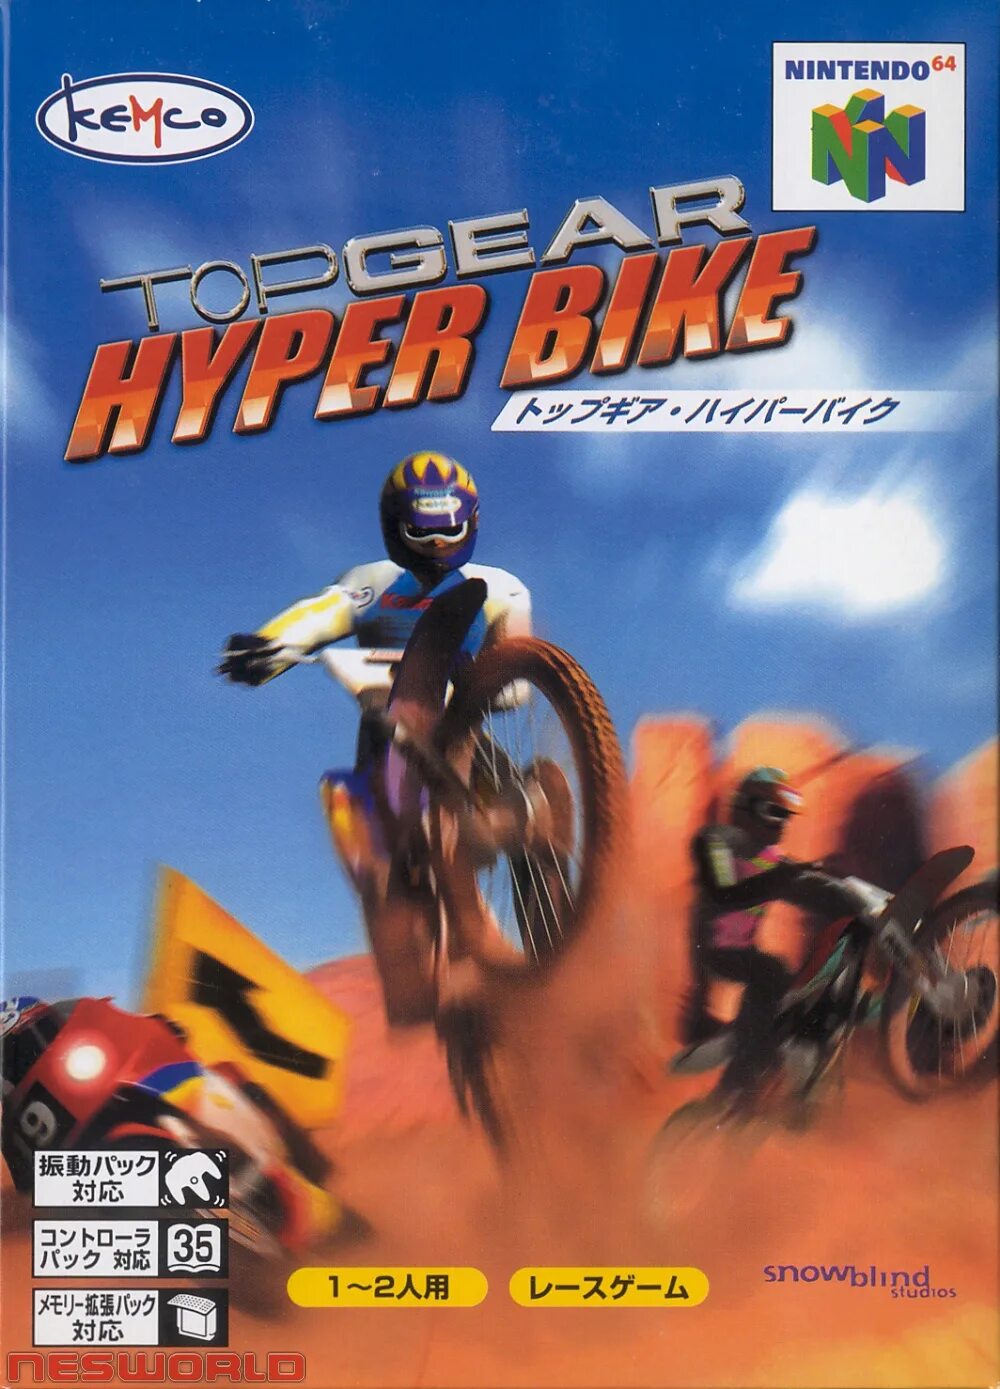 Top Gear Hyper Bike Turbo Nintendo 64. Top Gear Overdrive Nintendo 64. Нинтендо 64 игры.